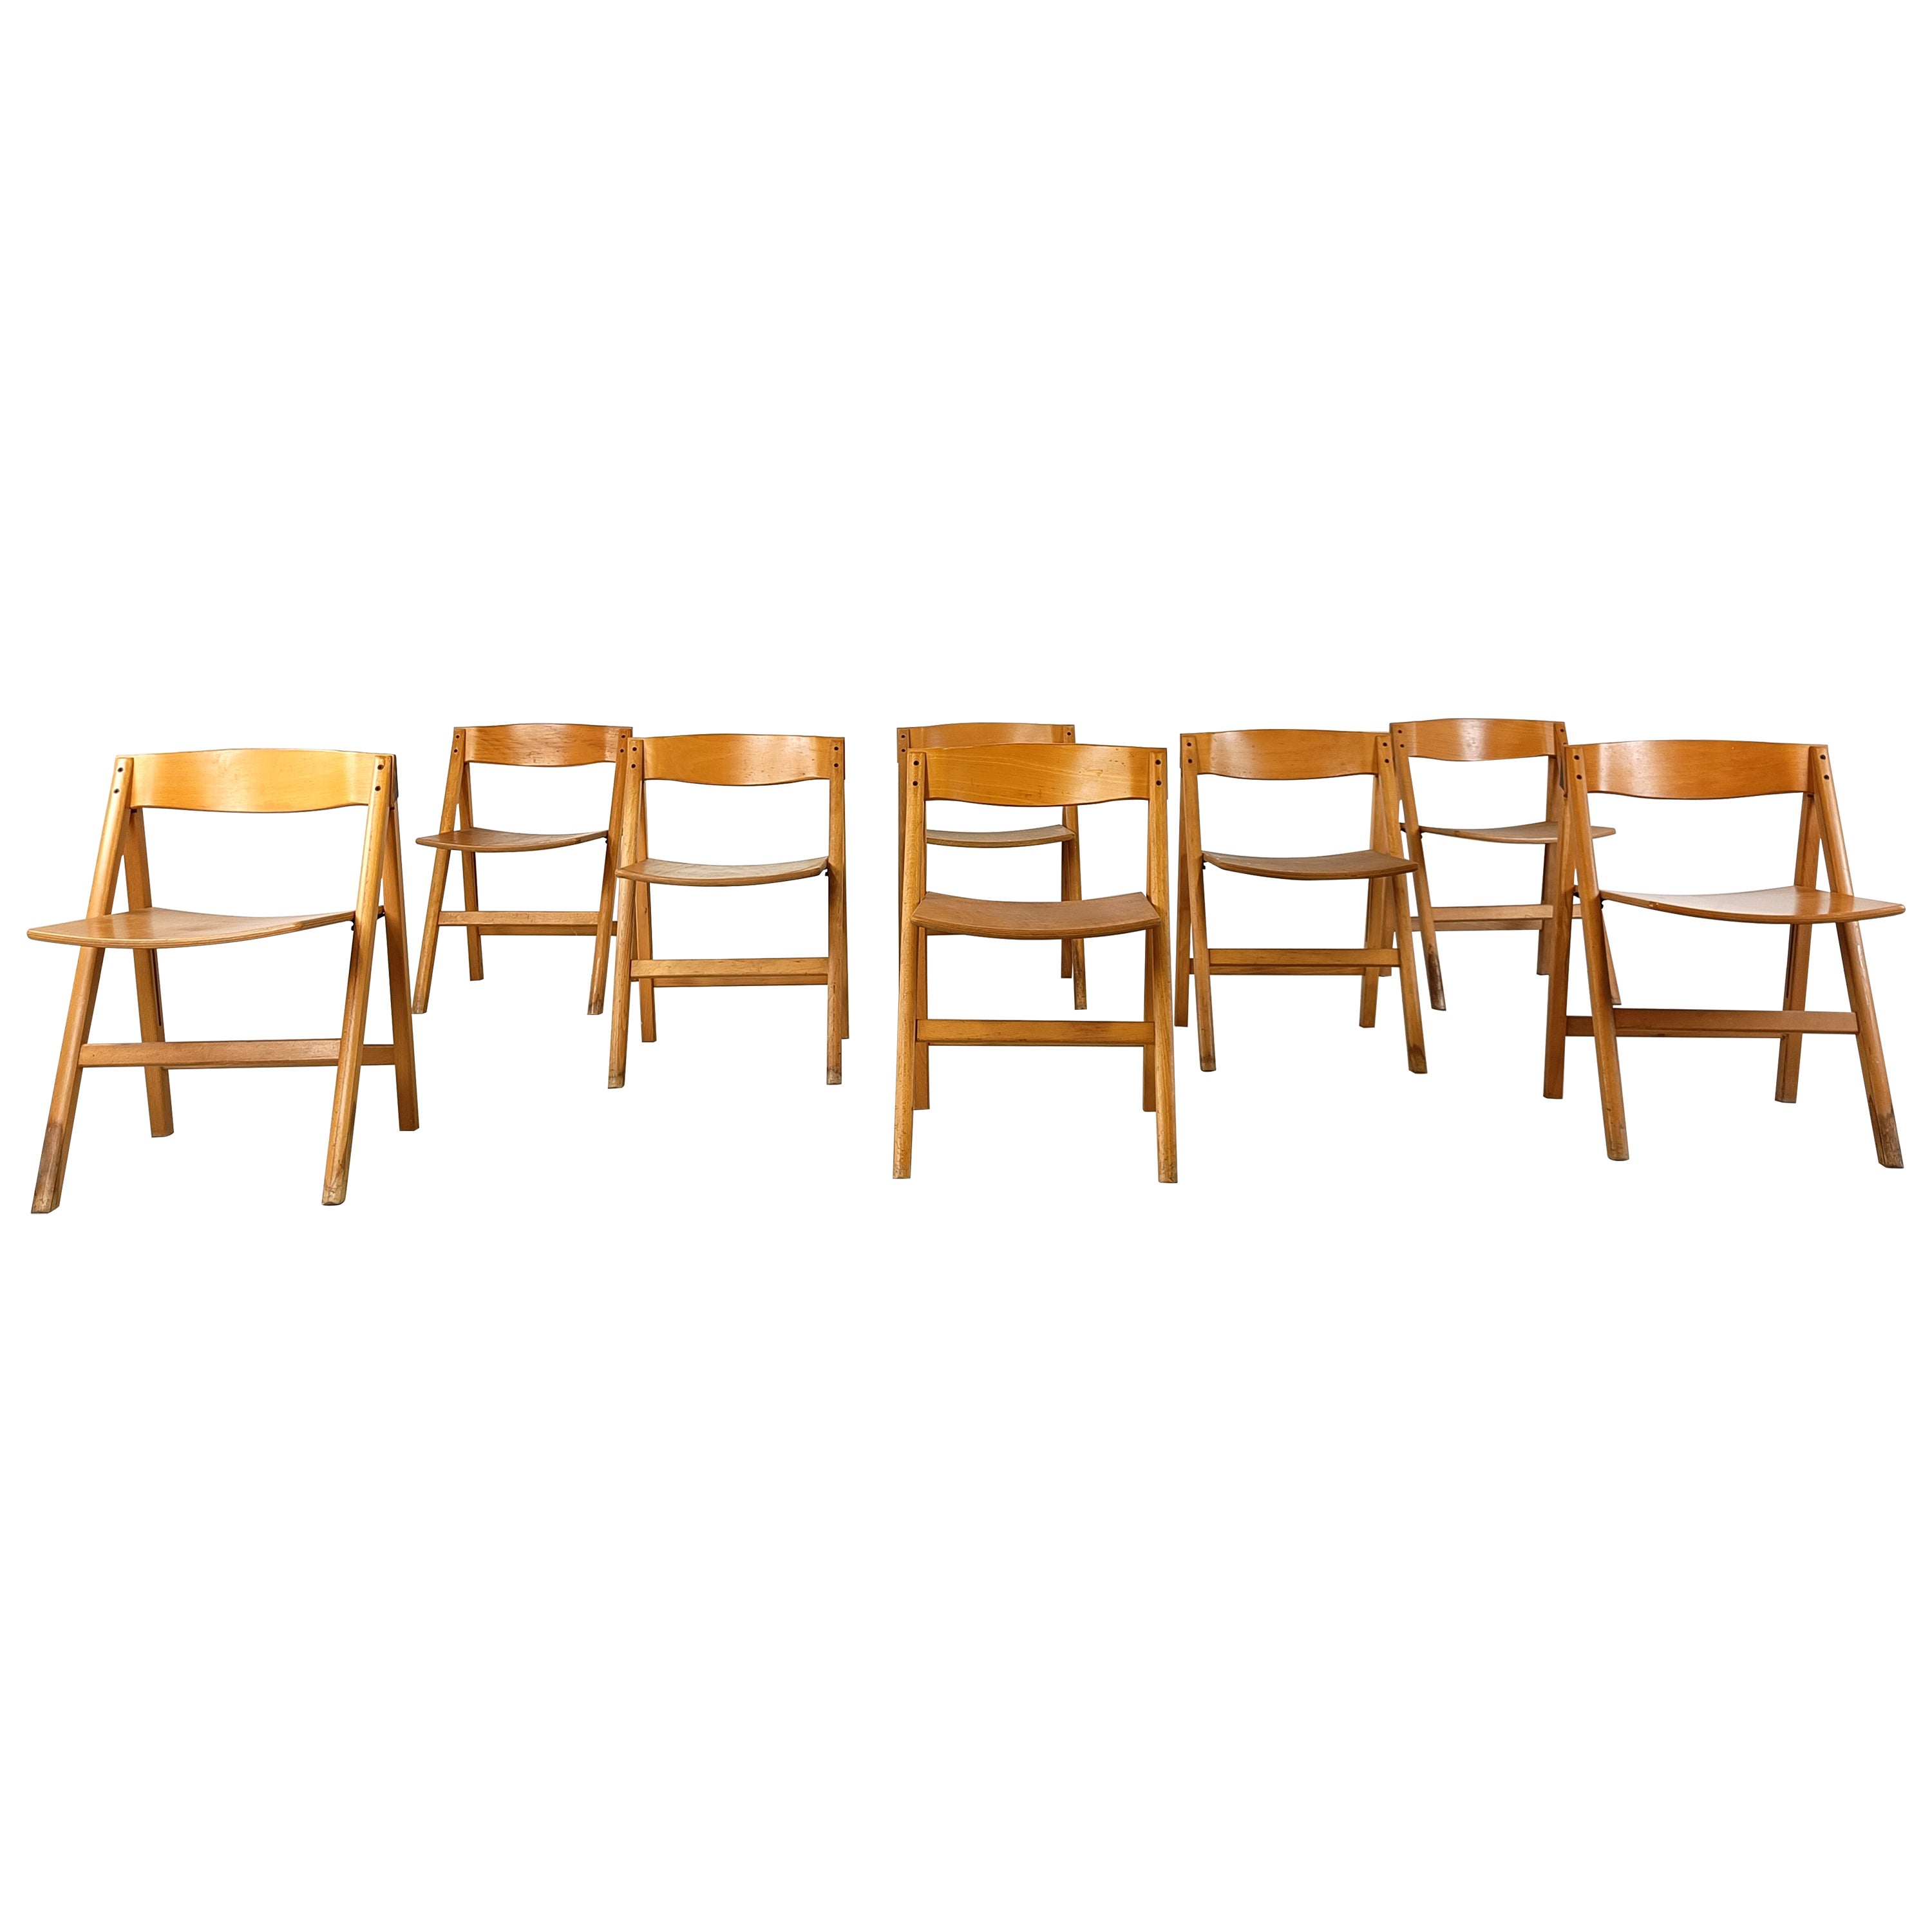 Vintage scandinavian folding chairs by Hyllinge Mobler, 1970s - set of 8